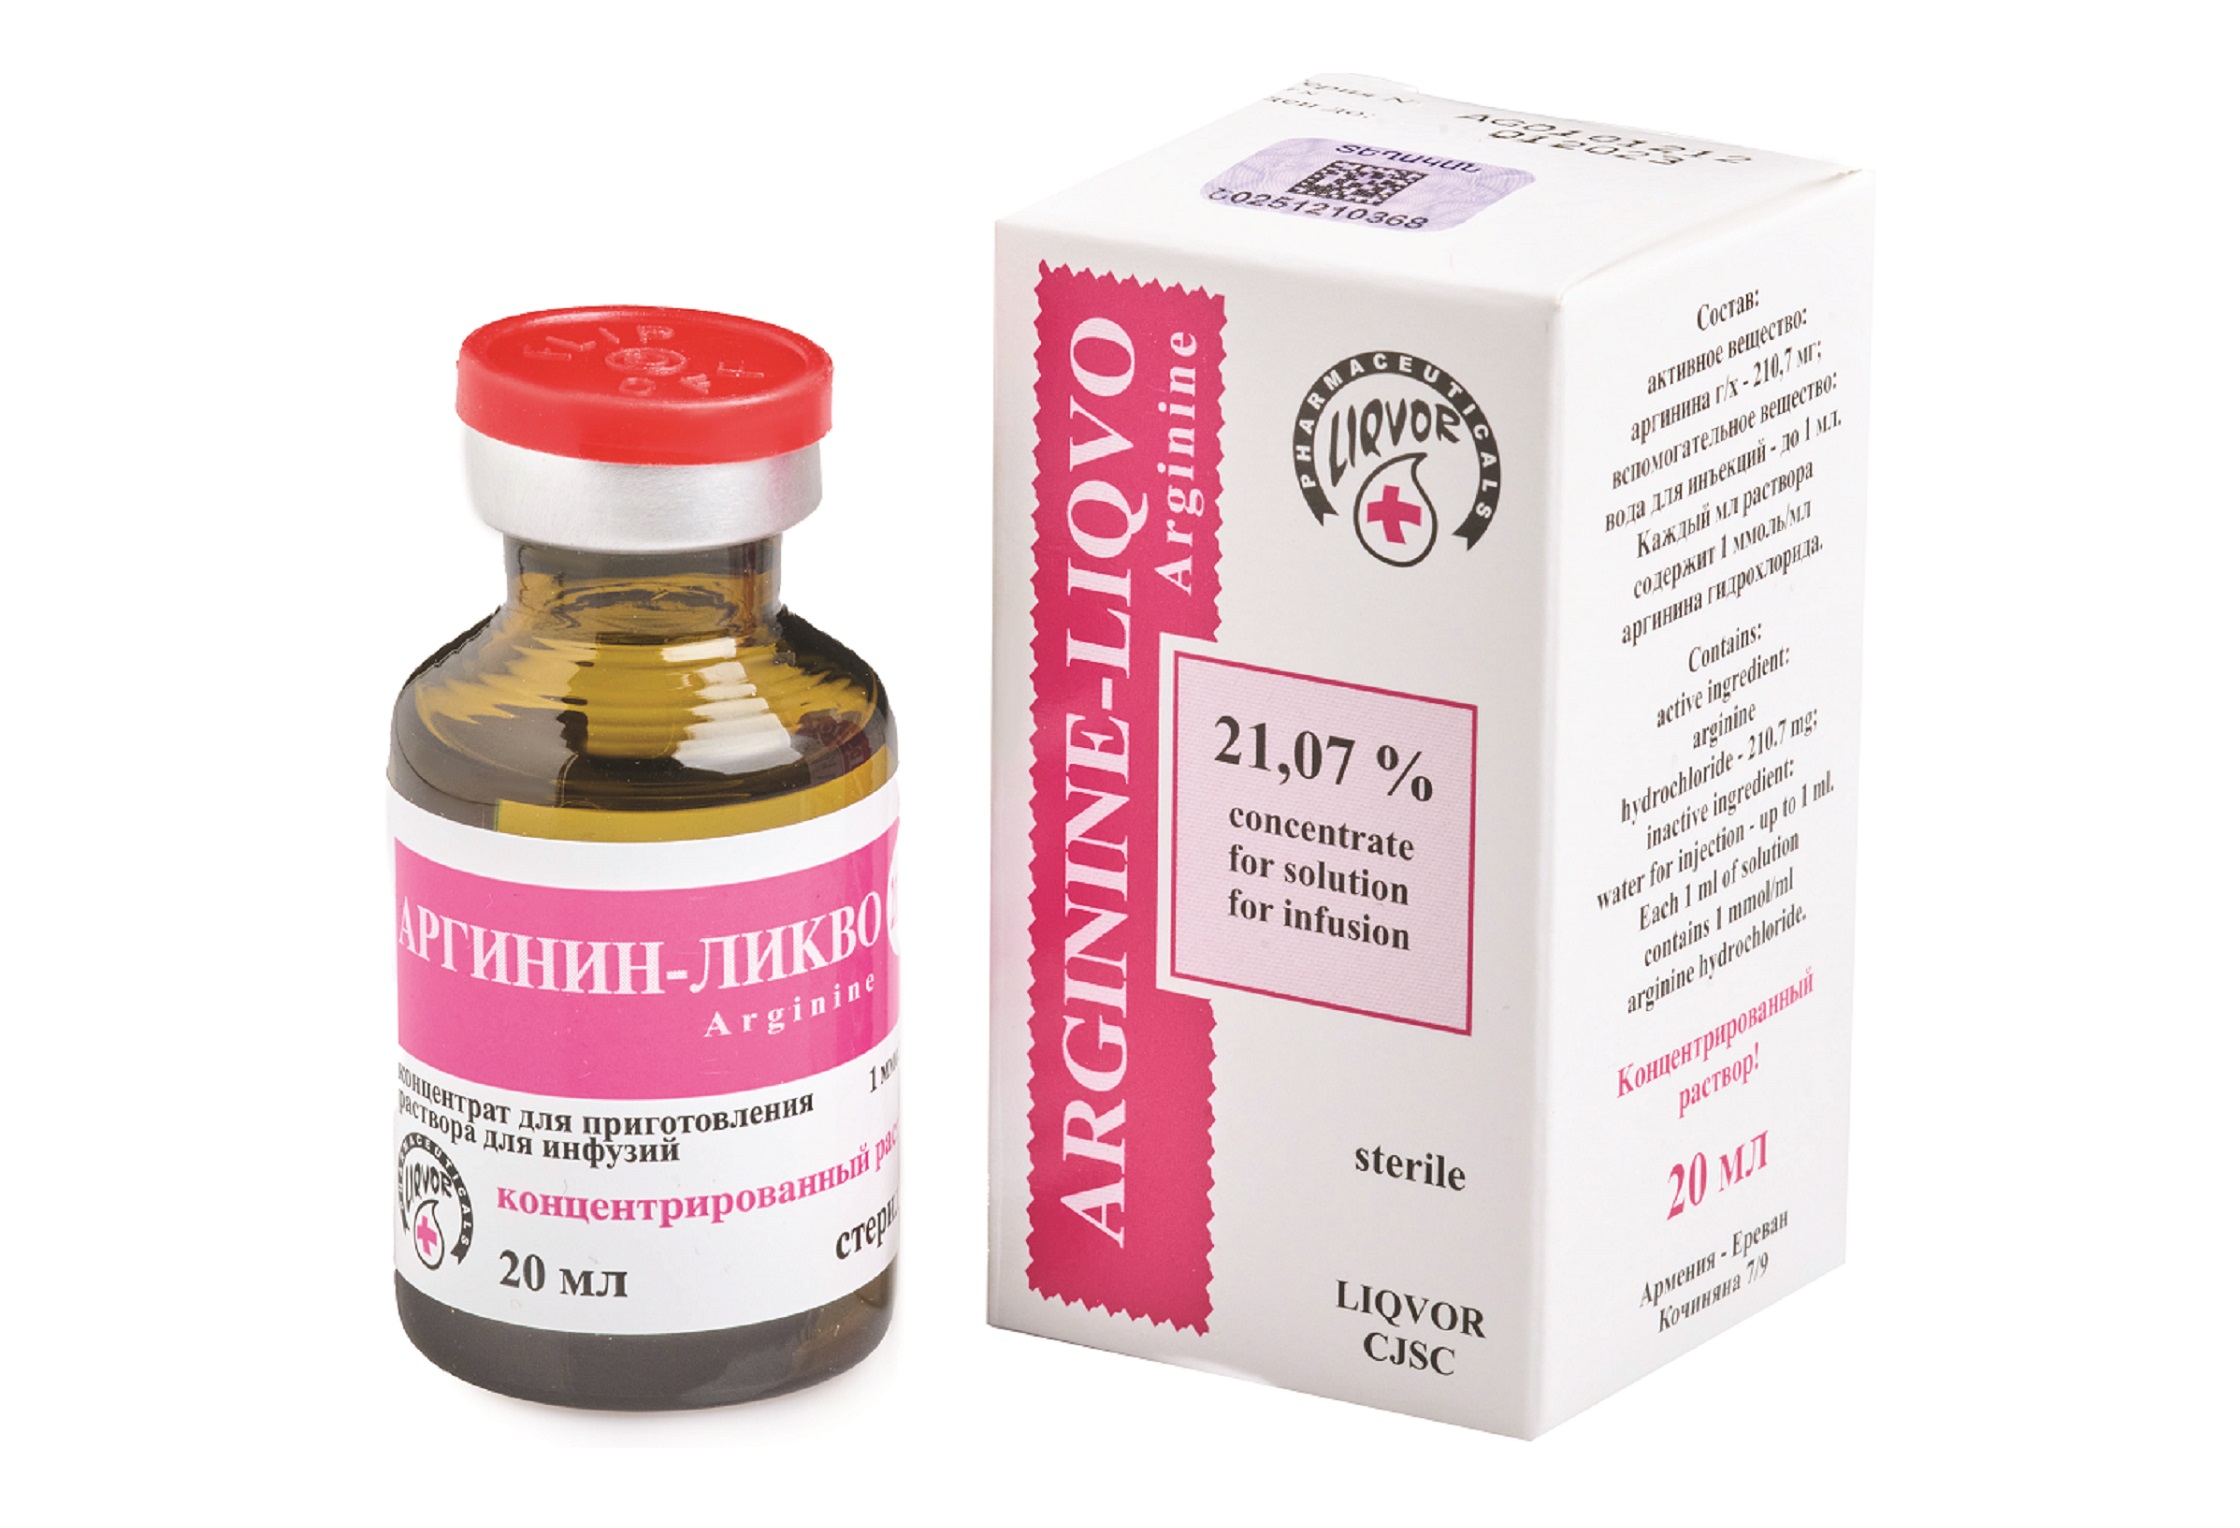 Solution concentrate for infusion Arginine-Liqvo (L-Arginine)